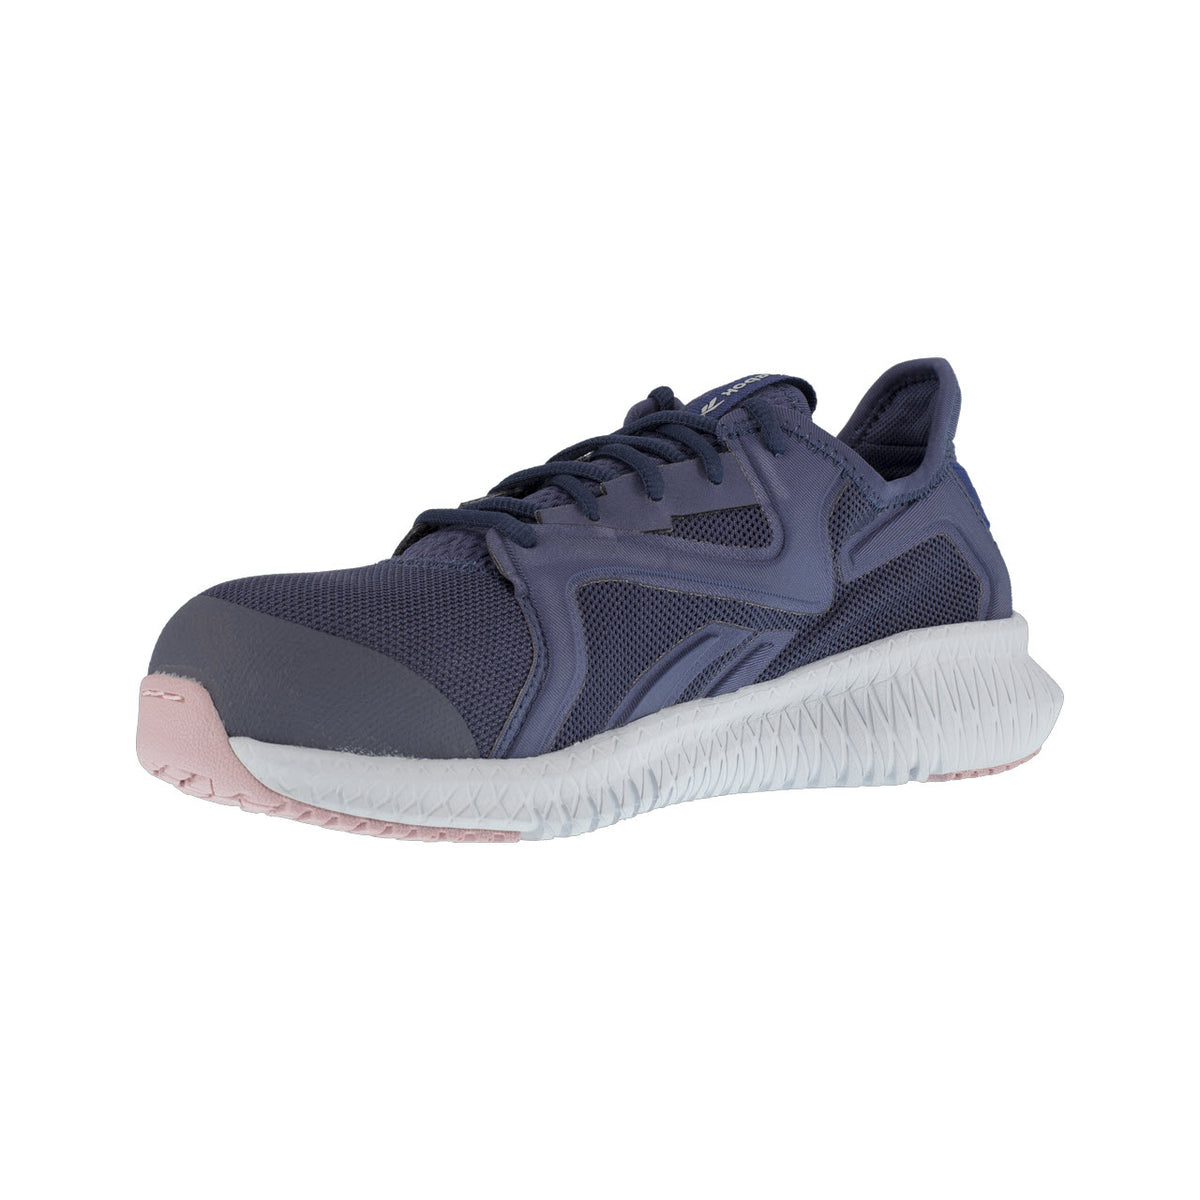 A single dark blue Reebok Work CT Flexagon 3 athletic shoe with white sole on a white background.